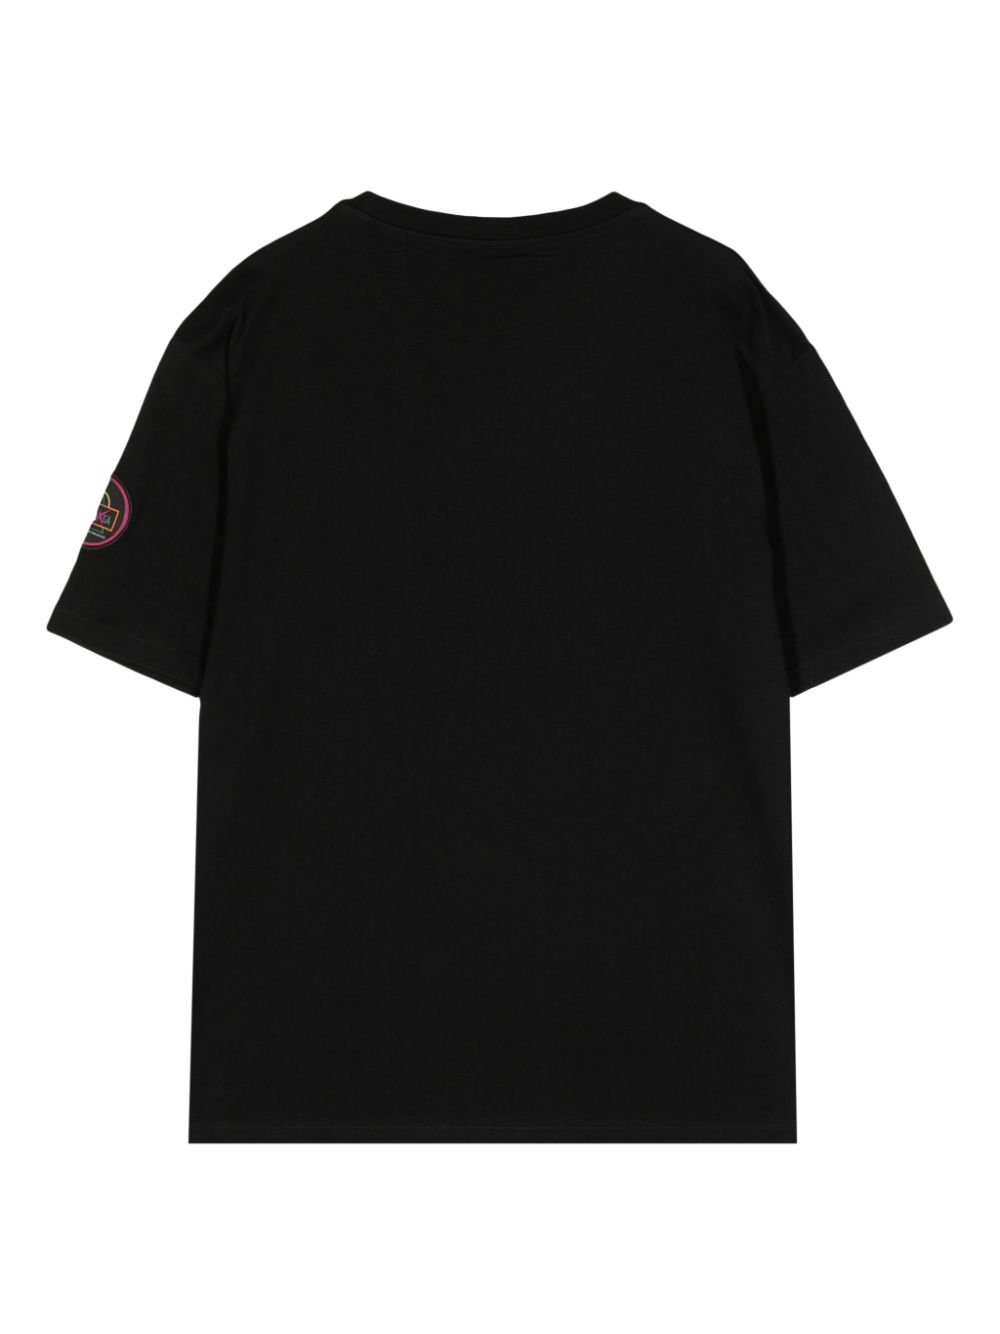 Mauna Kea Katoenen T-shirt Zwart